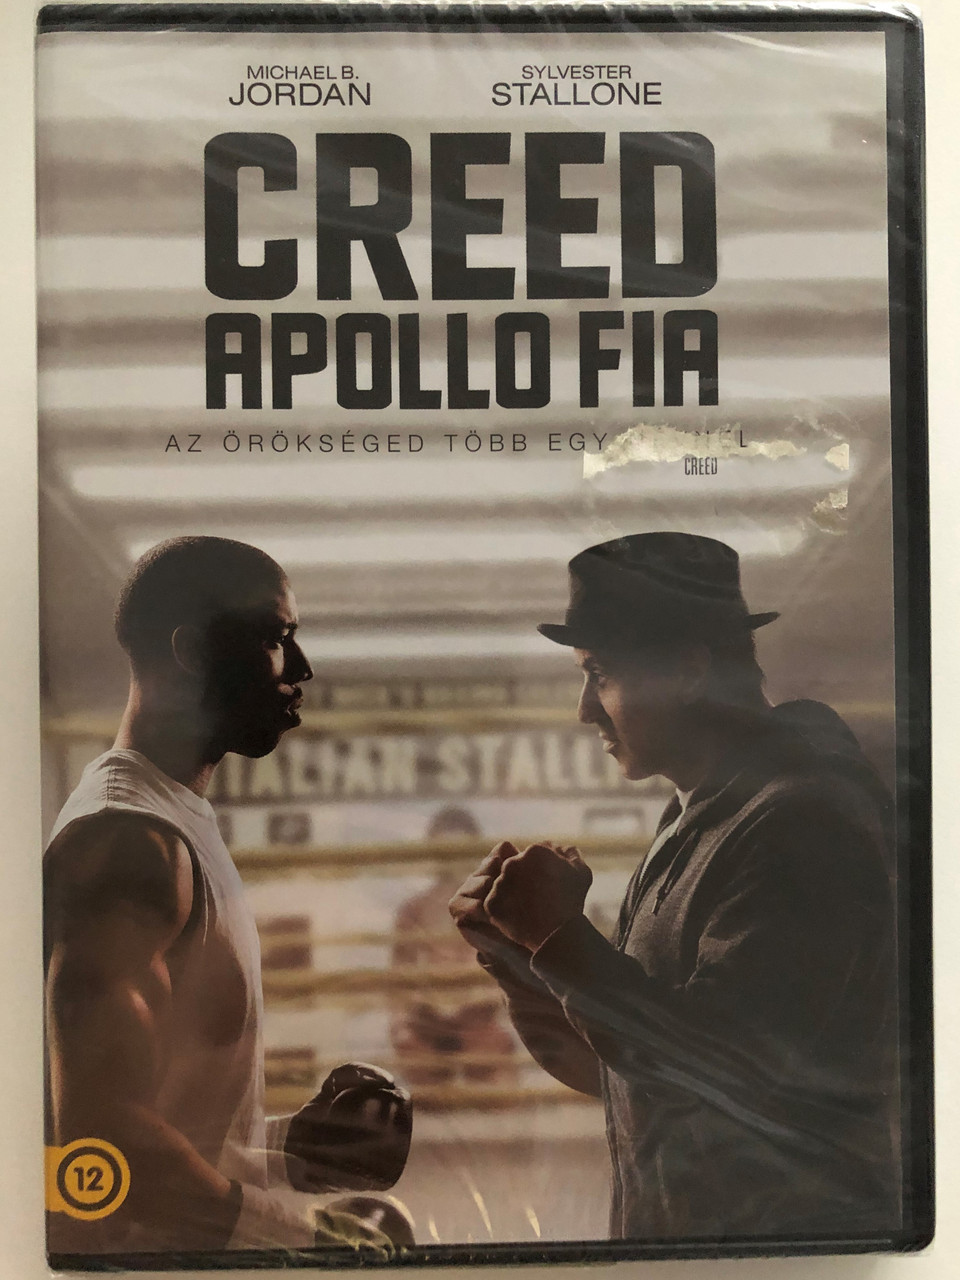 Creed DVD 2015 Creed Apollo fia / Directed by Ryan Coogler / Starring:  Michael B. Jordan, Sylvester Stallone, Michael B. Jordan Sylvester  Stallone, Tessa Thompson - bibleinmylanguage